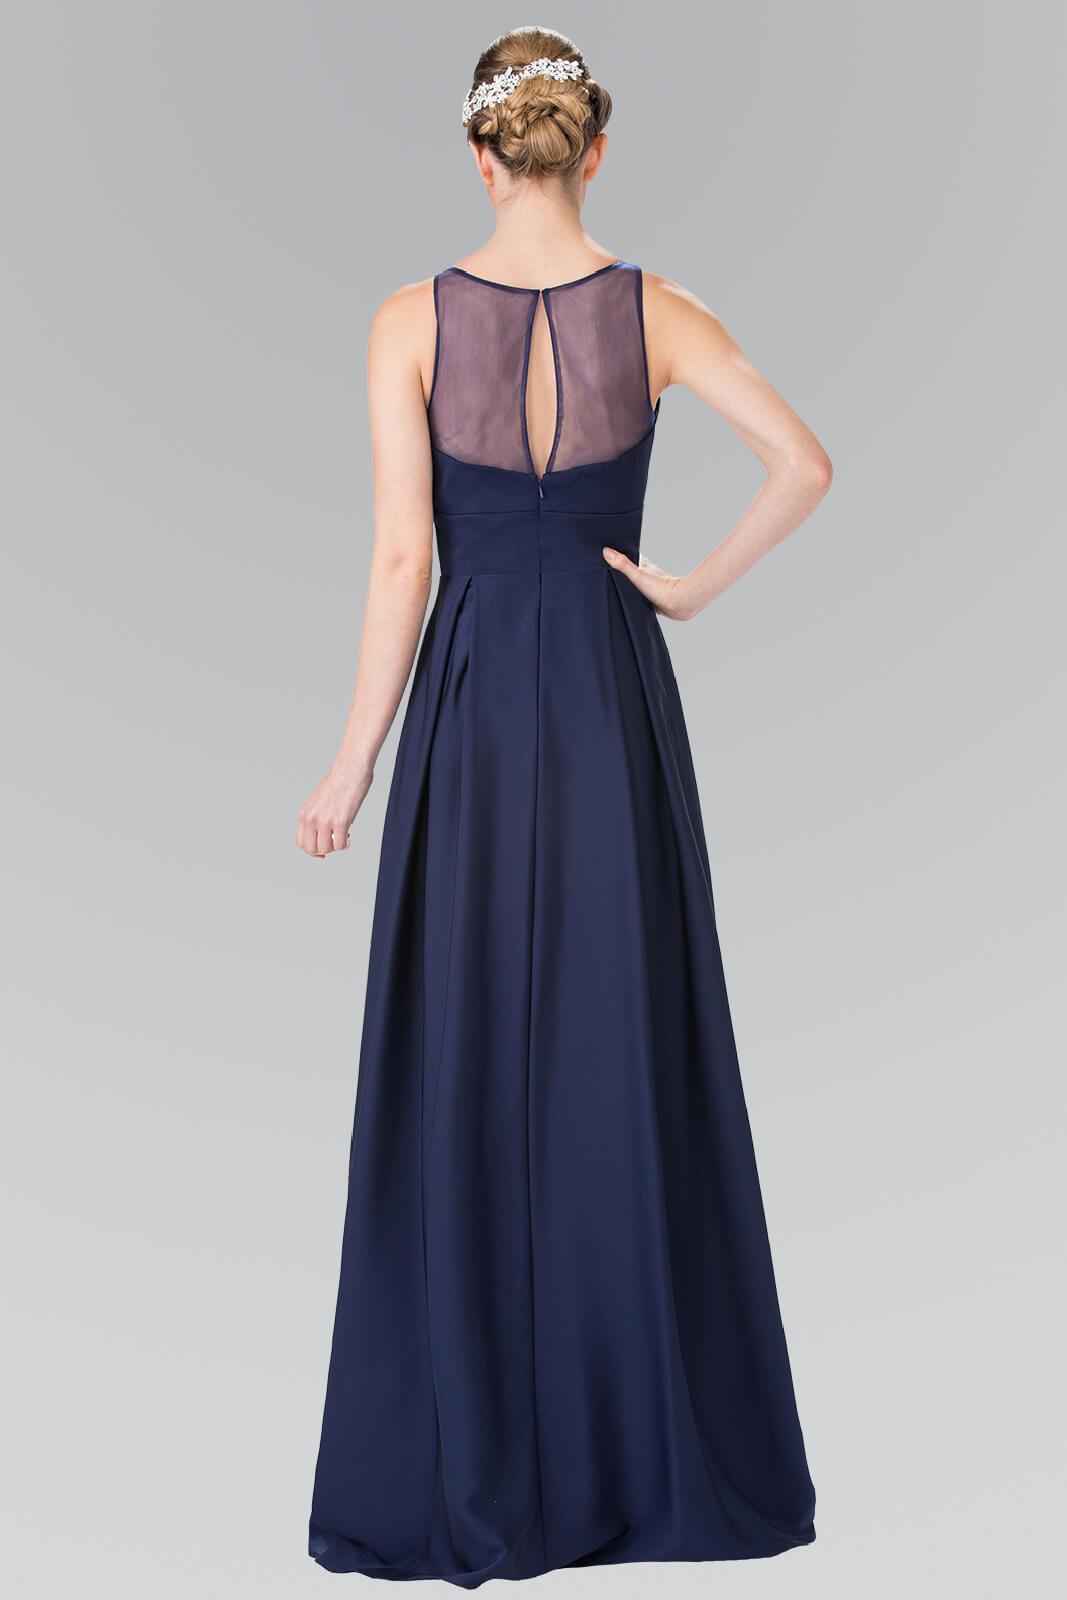 Prom Long Bridesmaid Dress Formal with Pockets - The Dress Outlet Elizabeth K